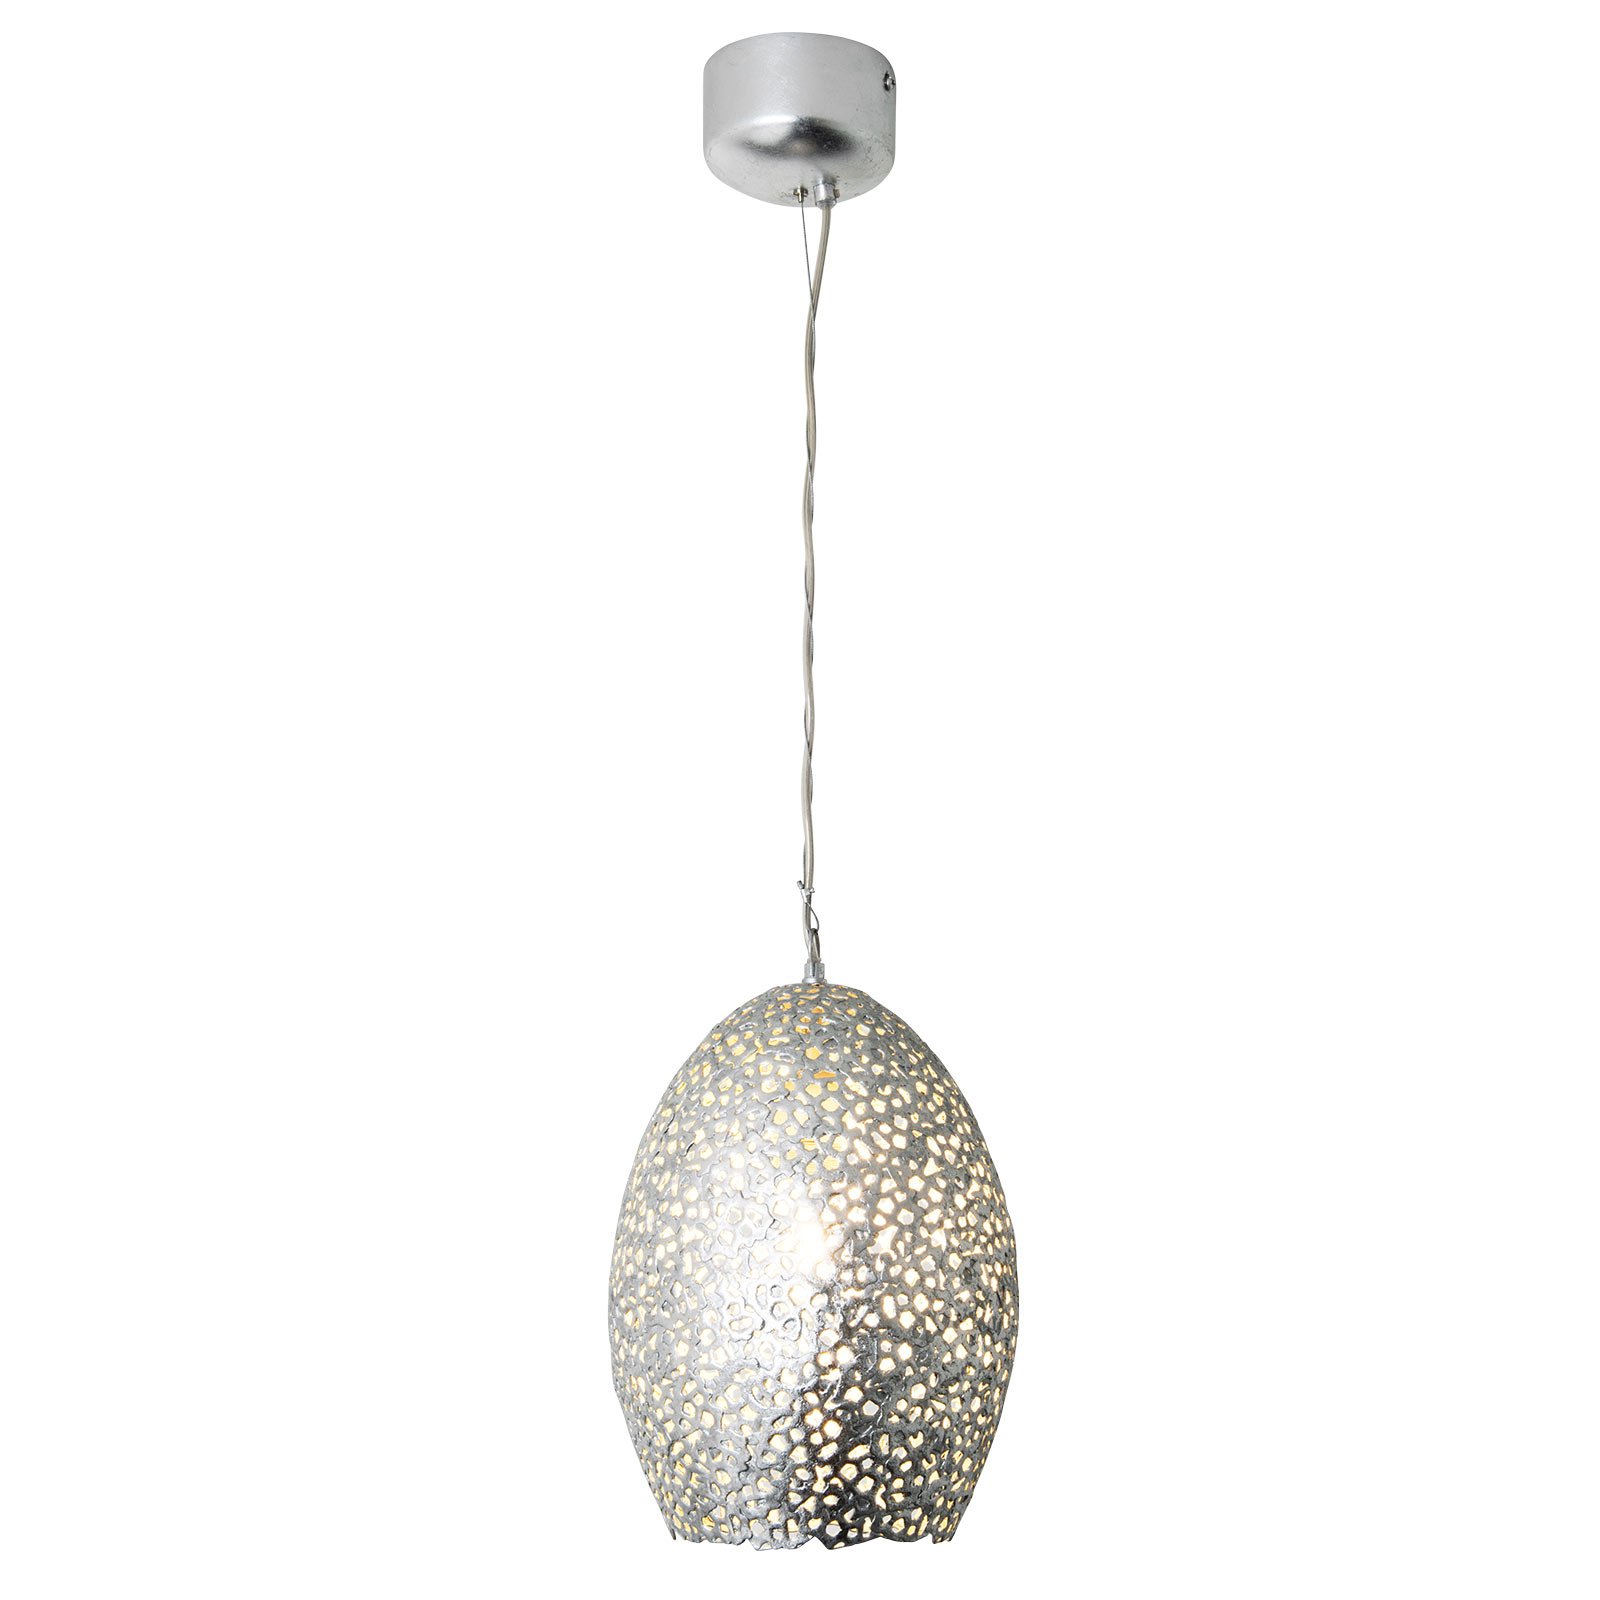 Cavalliere hanglamp, zilver, Ø 22 cm